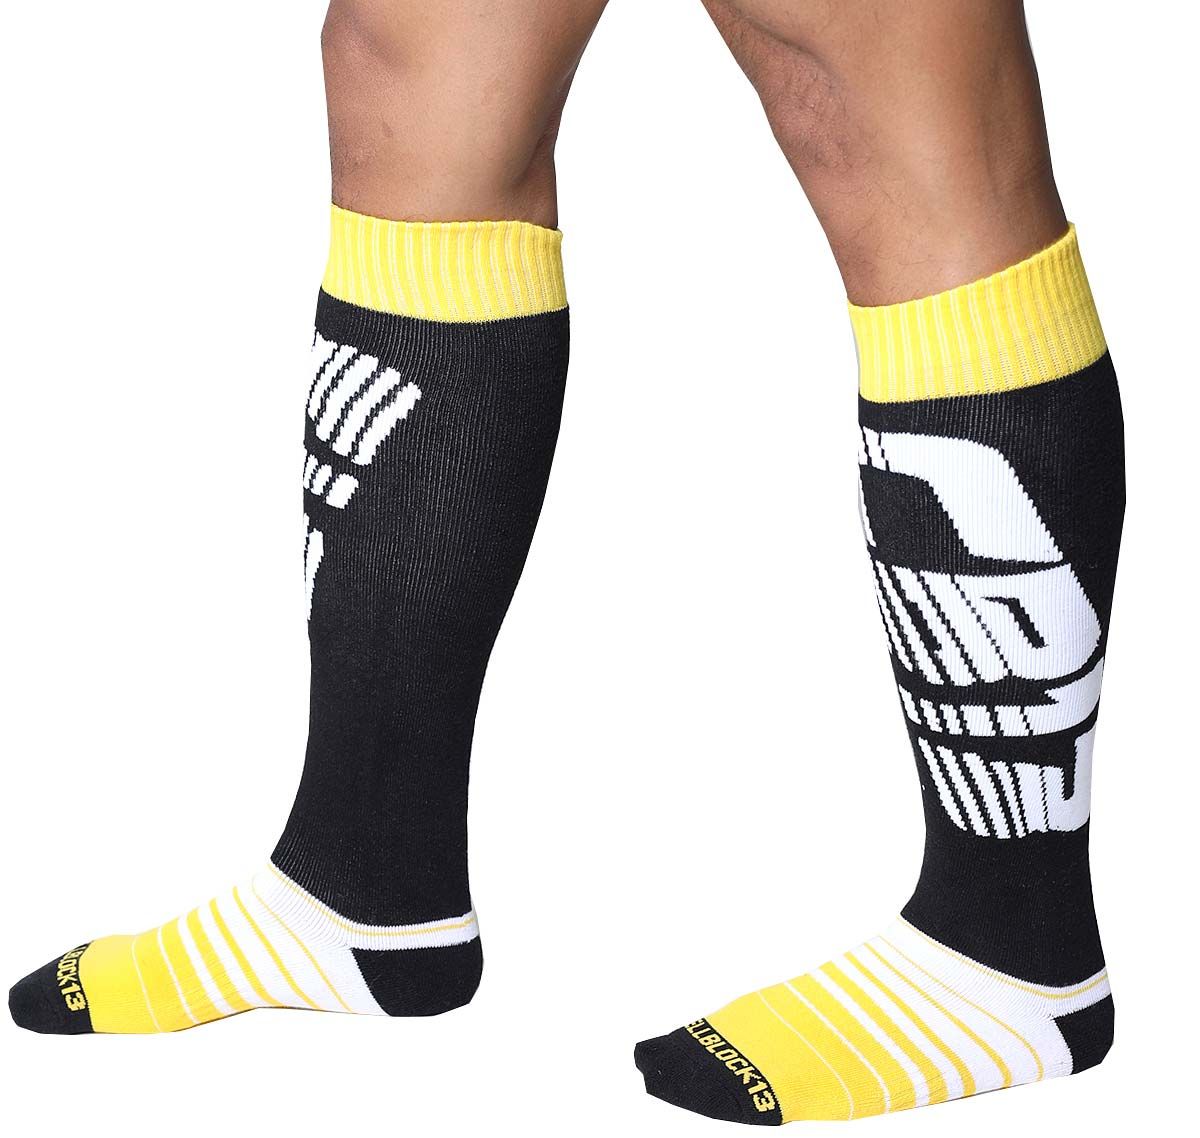 Cellblock 13 Sport socks VELOCITY 2.0 KNEE HIGH SOCK, yellow